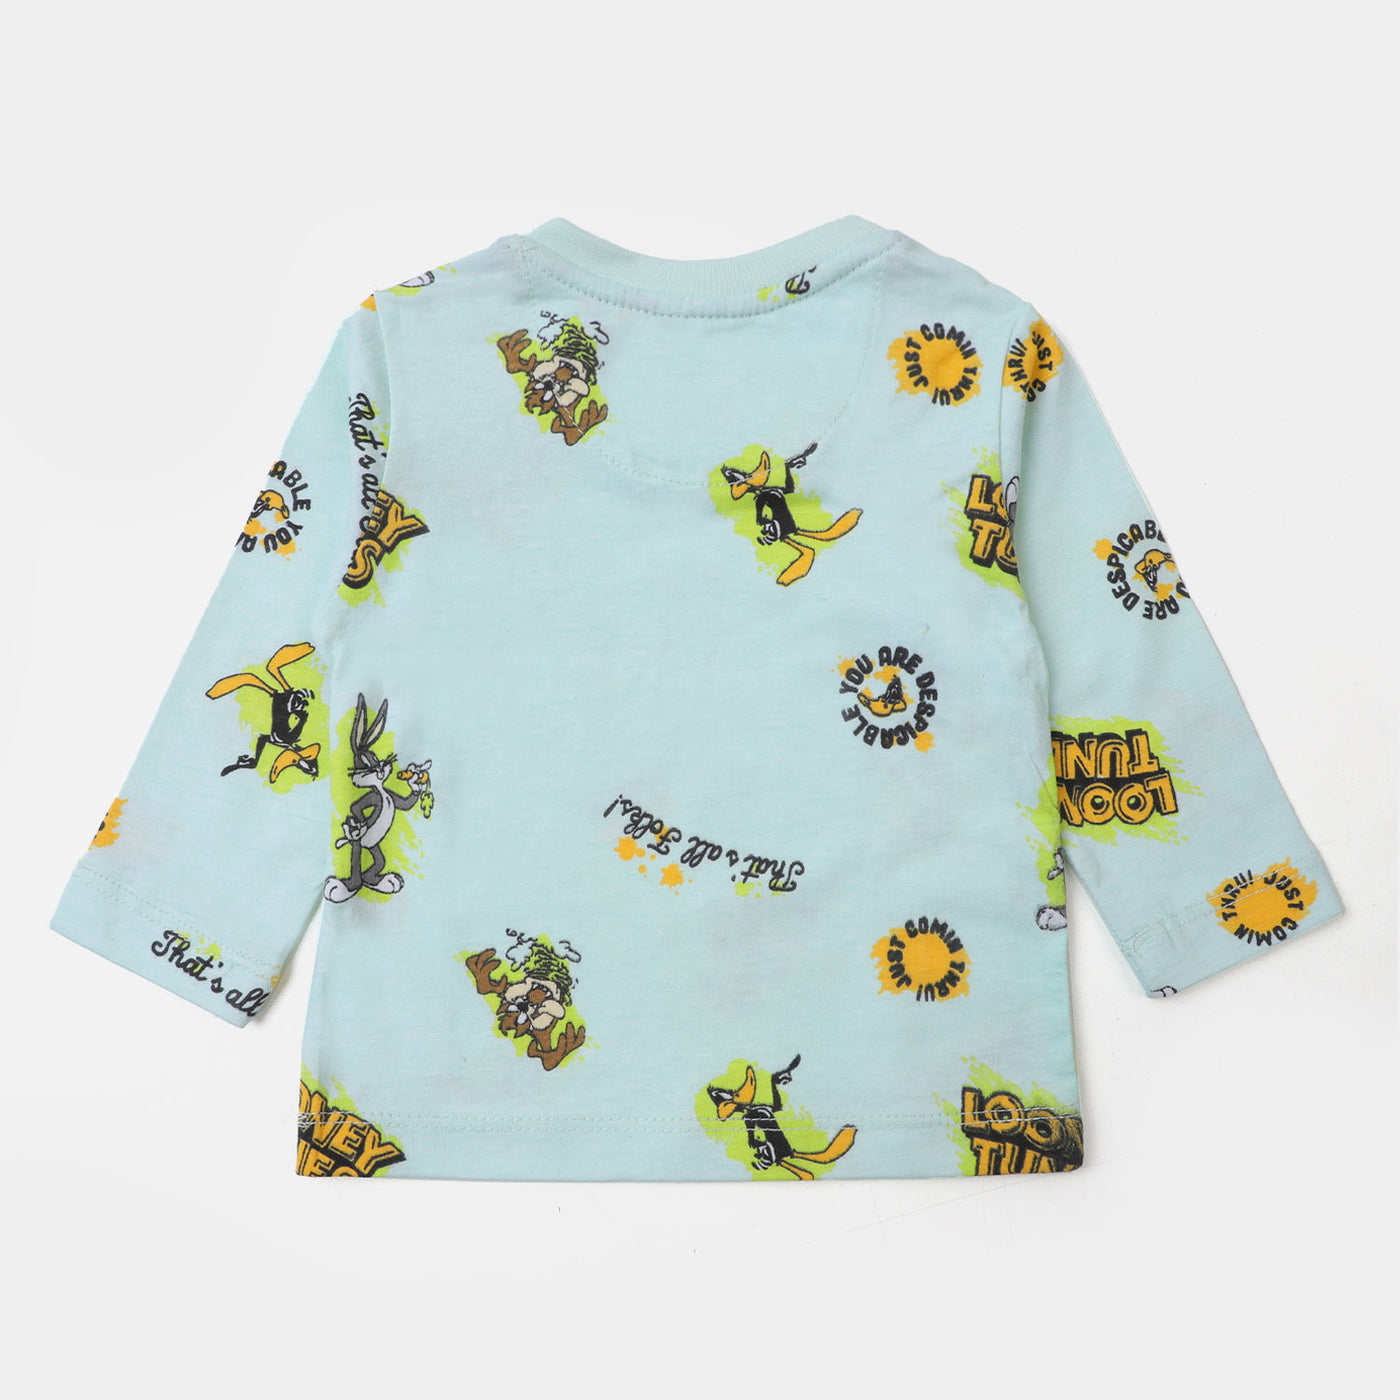 Infant Boys T-Shirt  Character Print